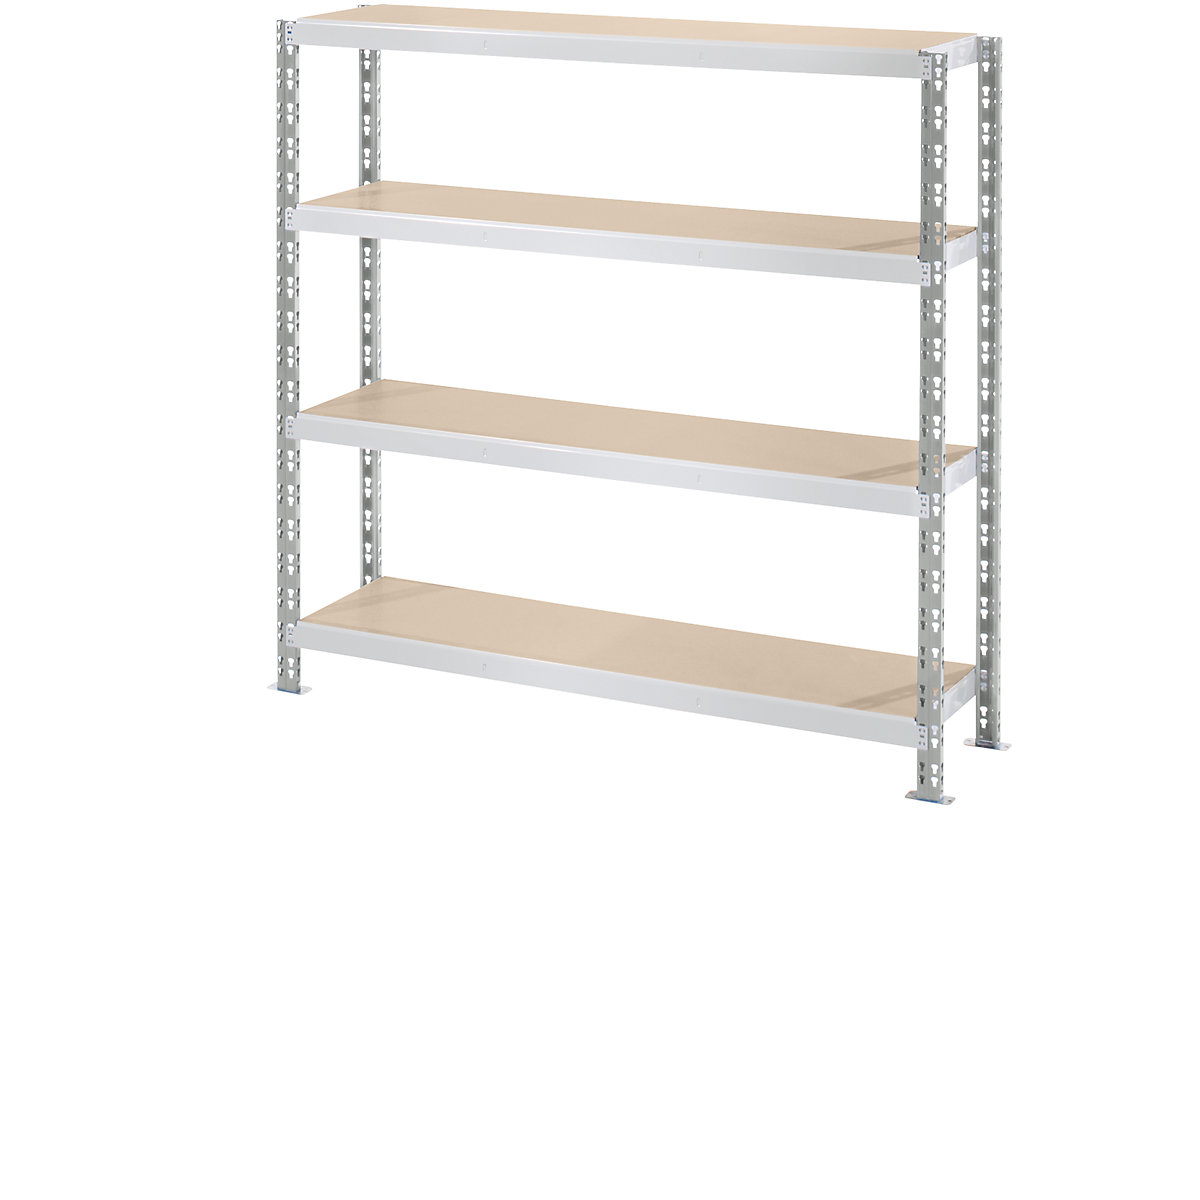 Wide span boltless shelf unit with moulded chipboard shelves, depth 400 mm, standard shelf unit, HxW 1508 x 1550 mm